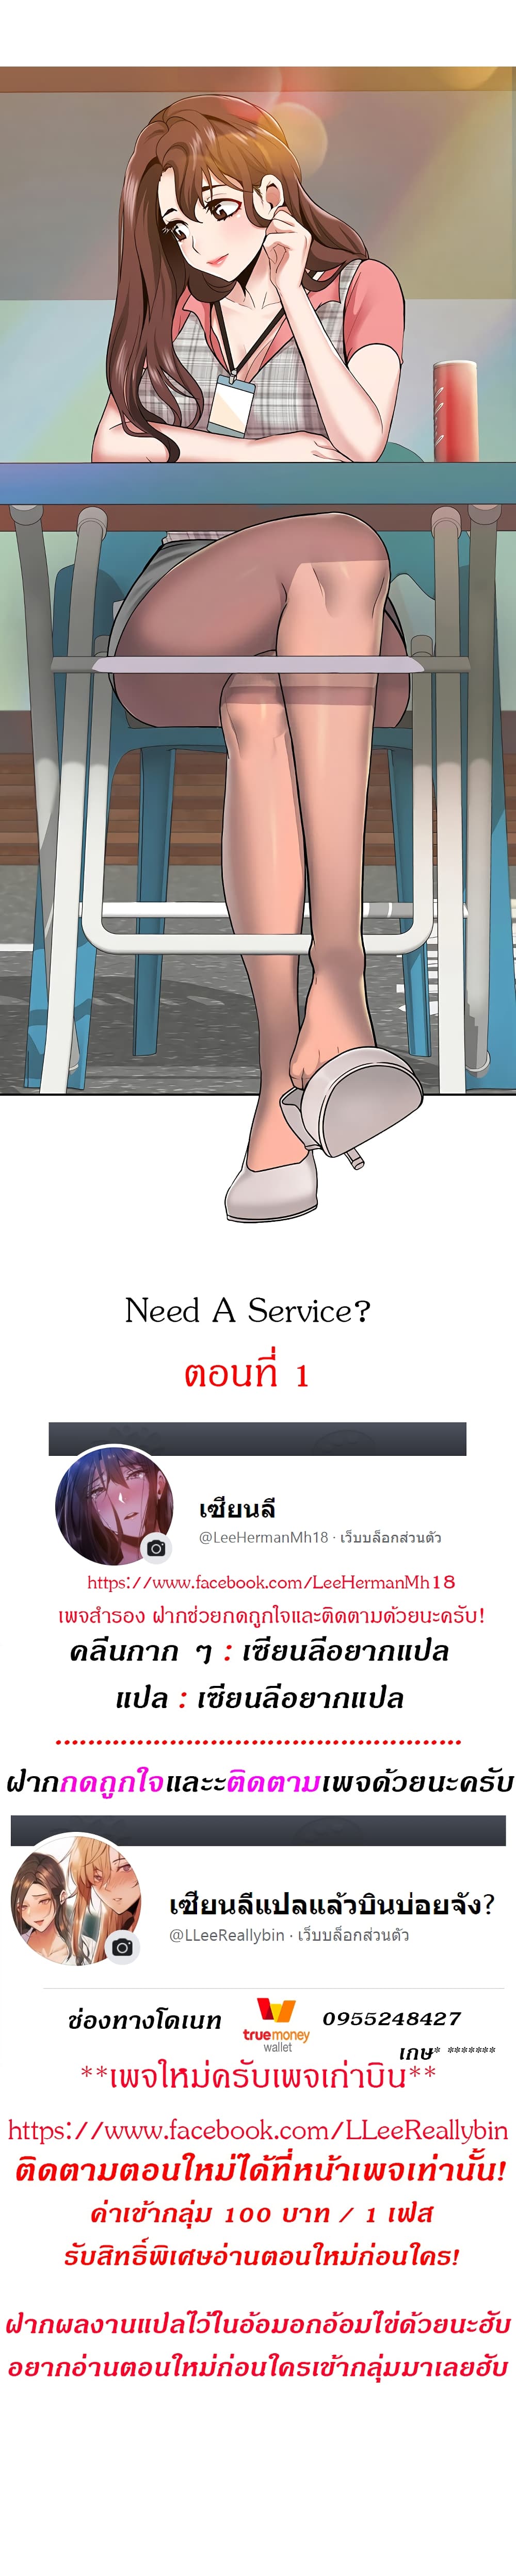 Need A Service 1 (1)